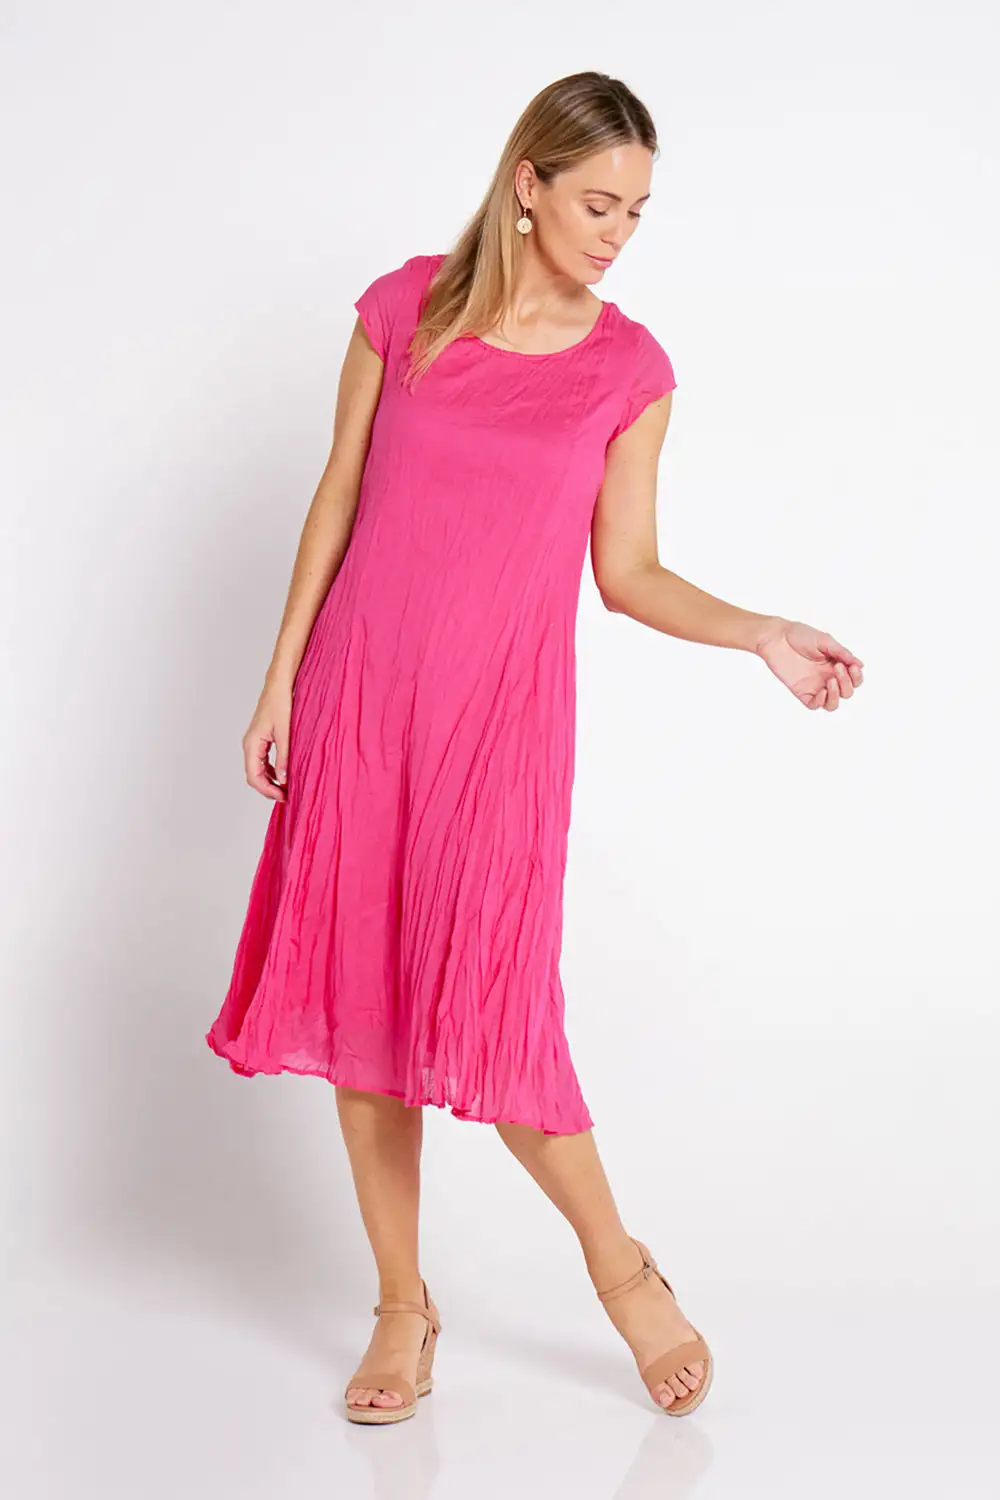 Parker Cotton Dress - Hot Pink